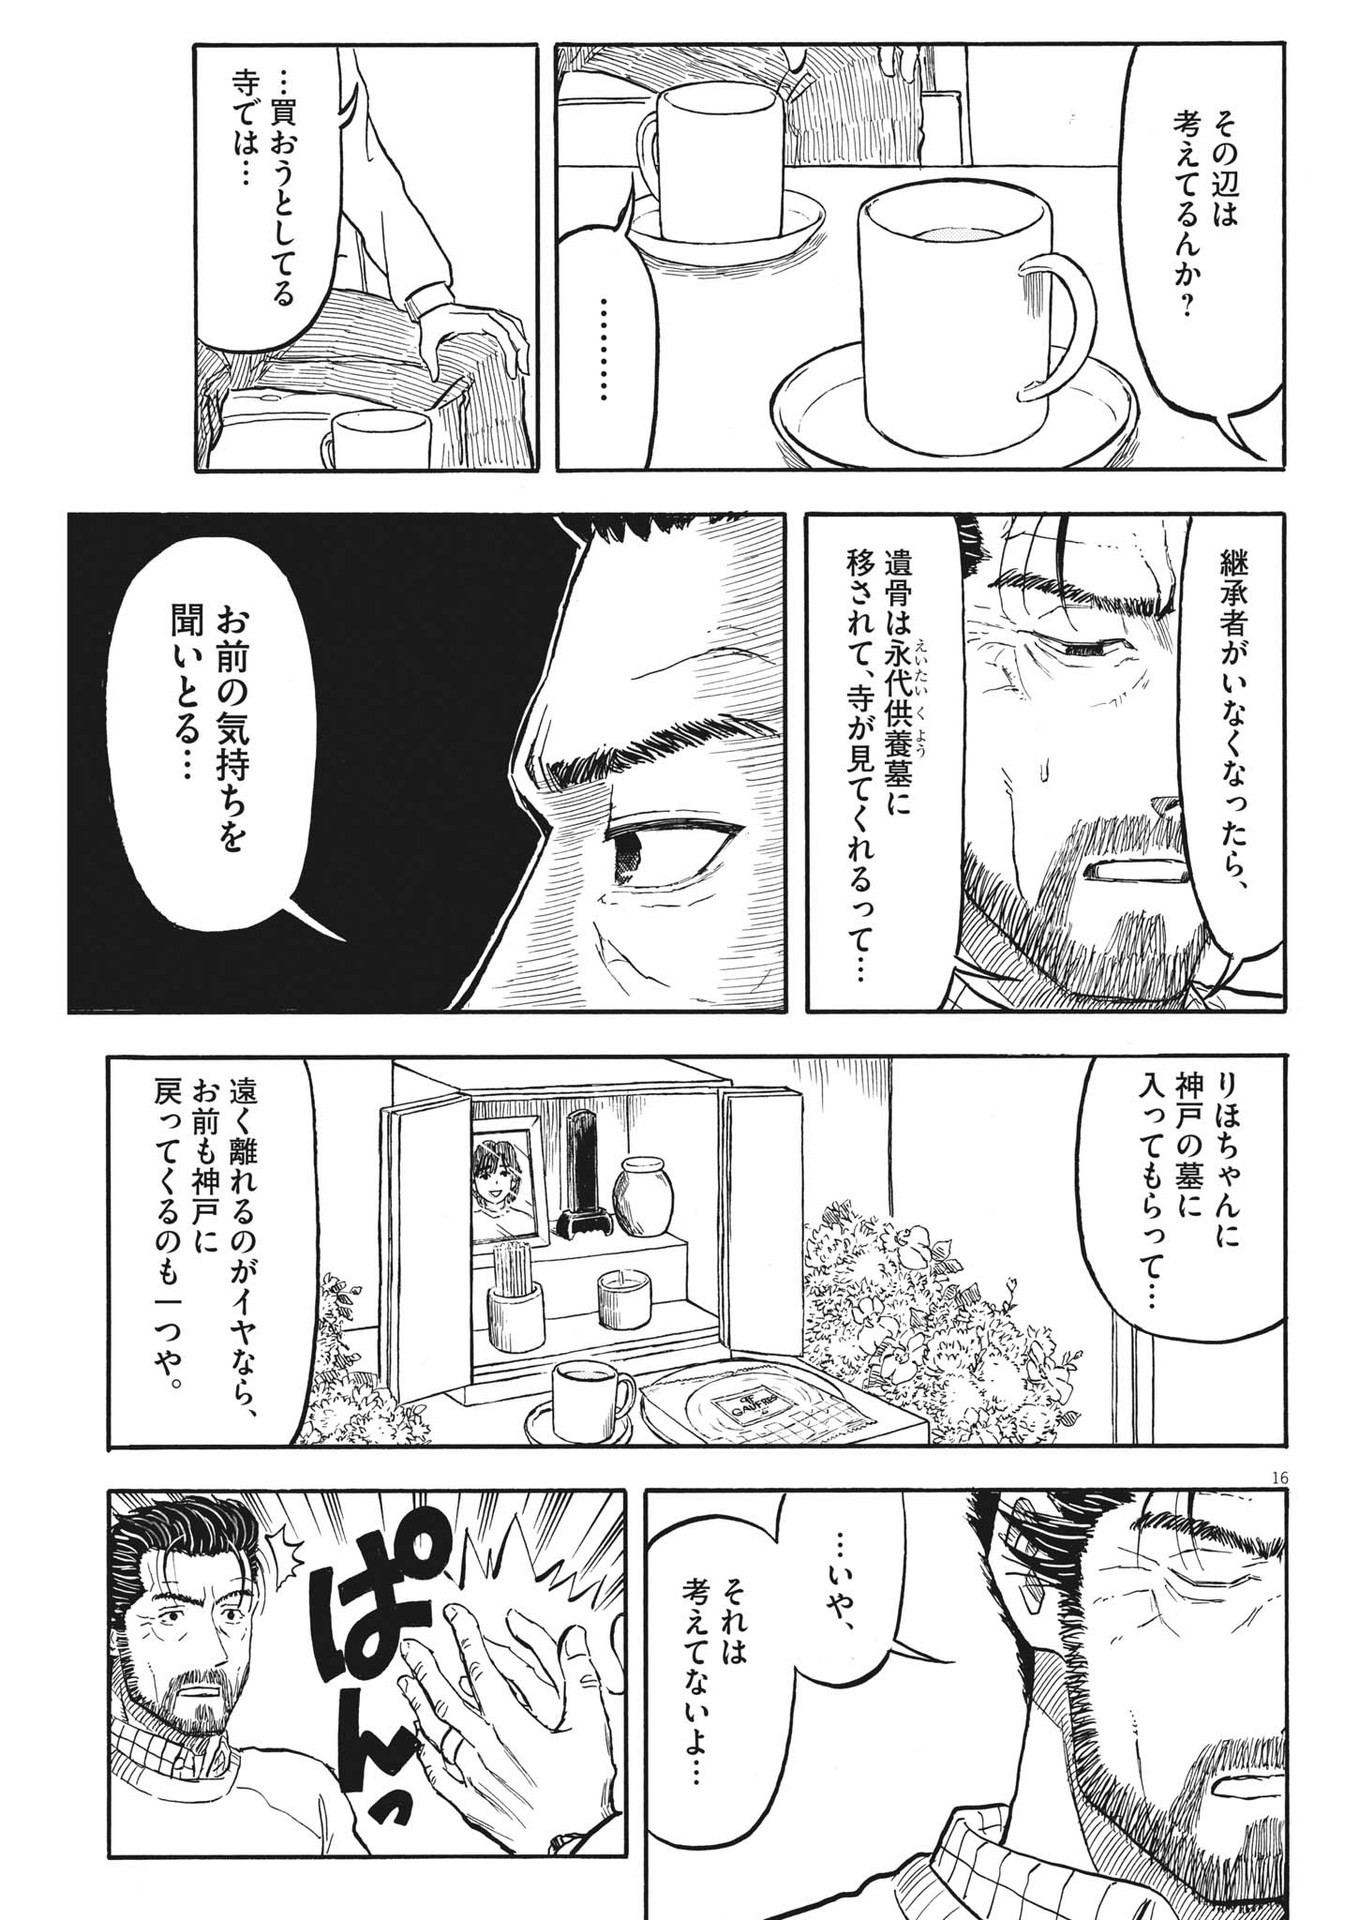 Komegura Fuufu no Recipe-chou - Chapter 31 - Page 16